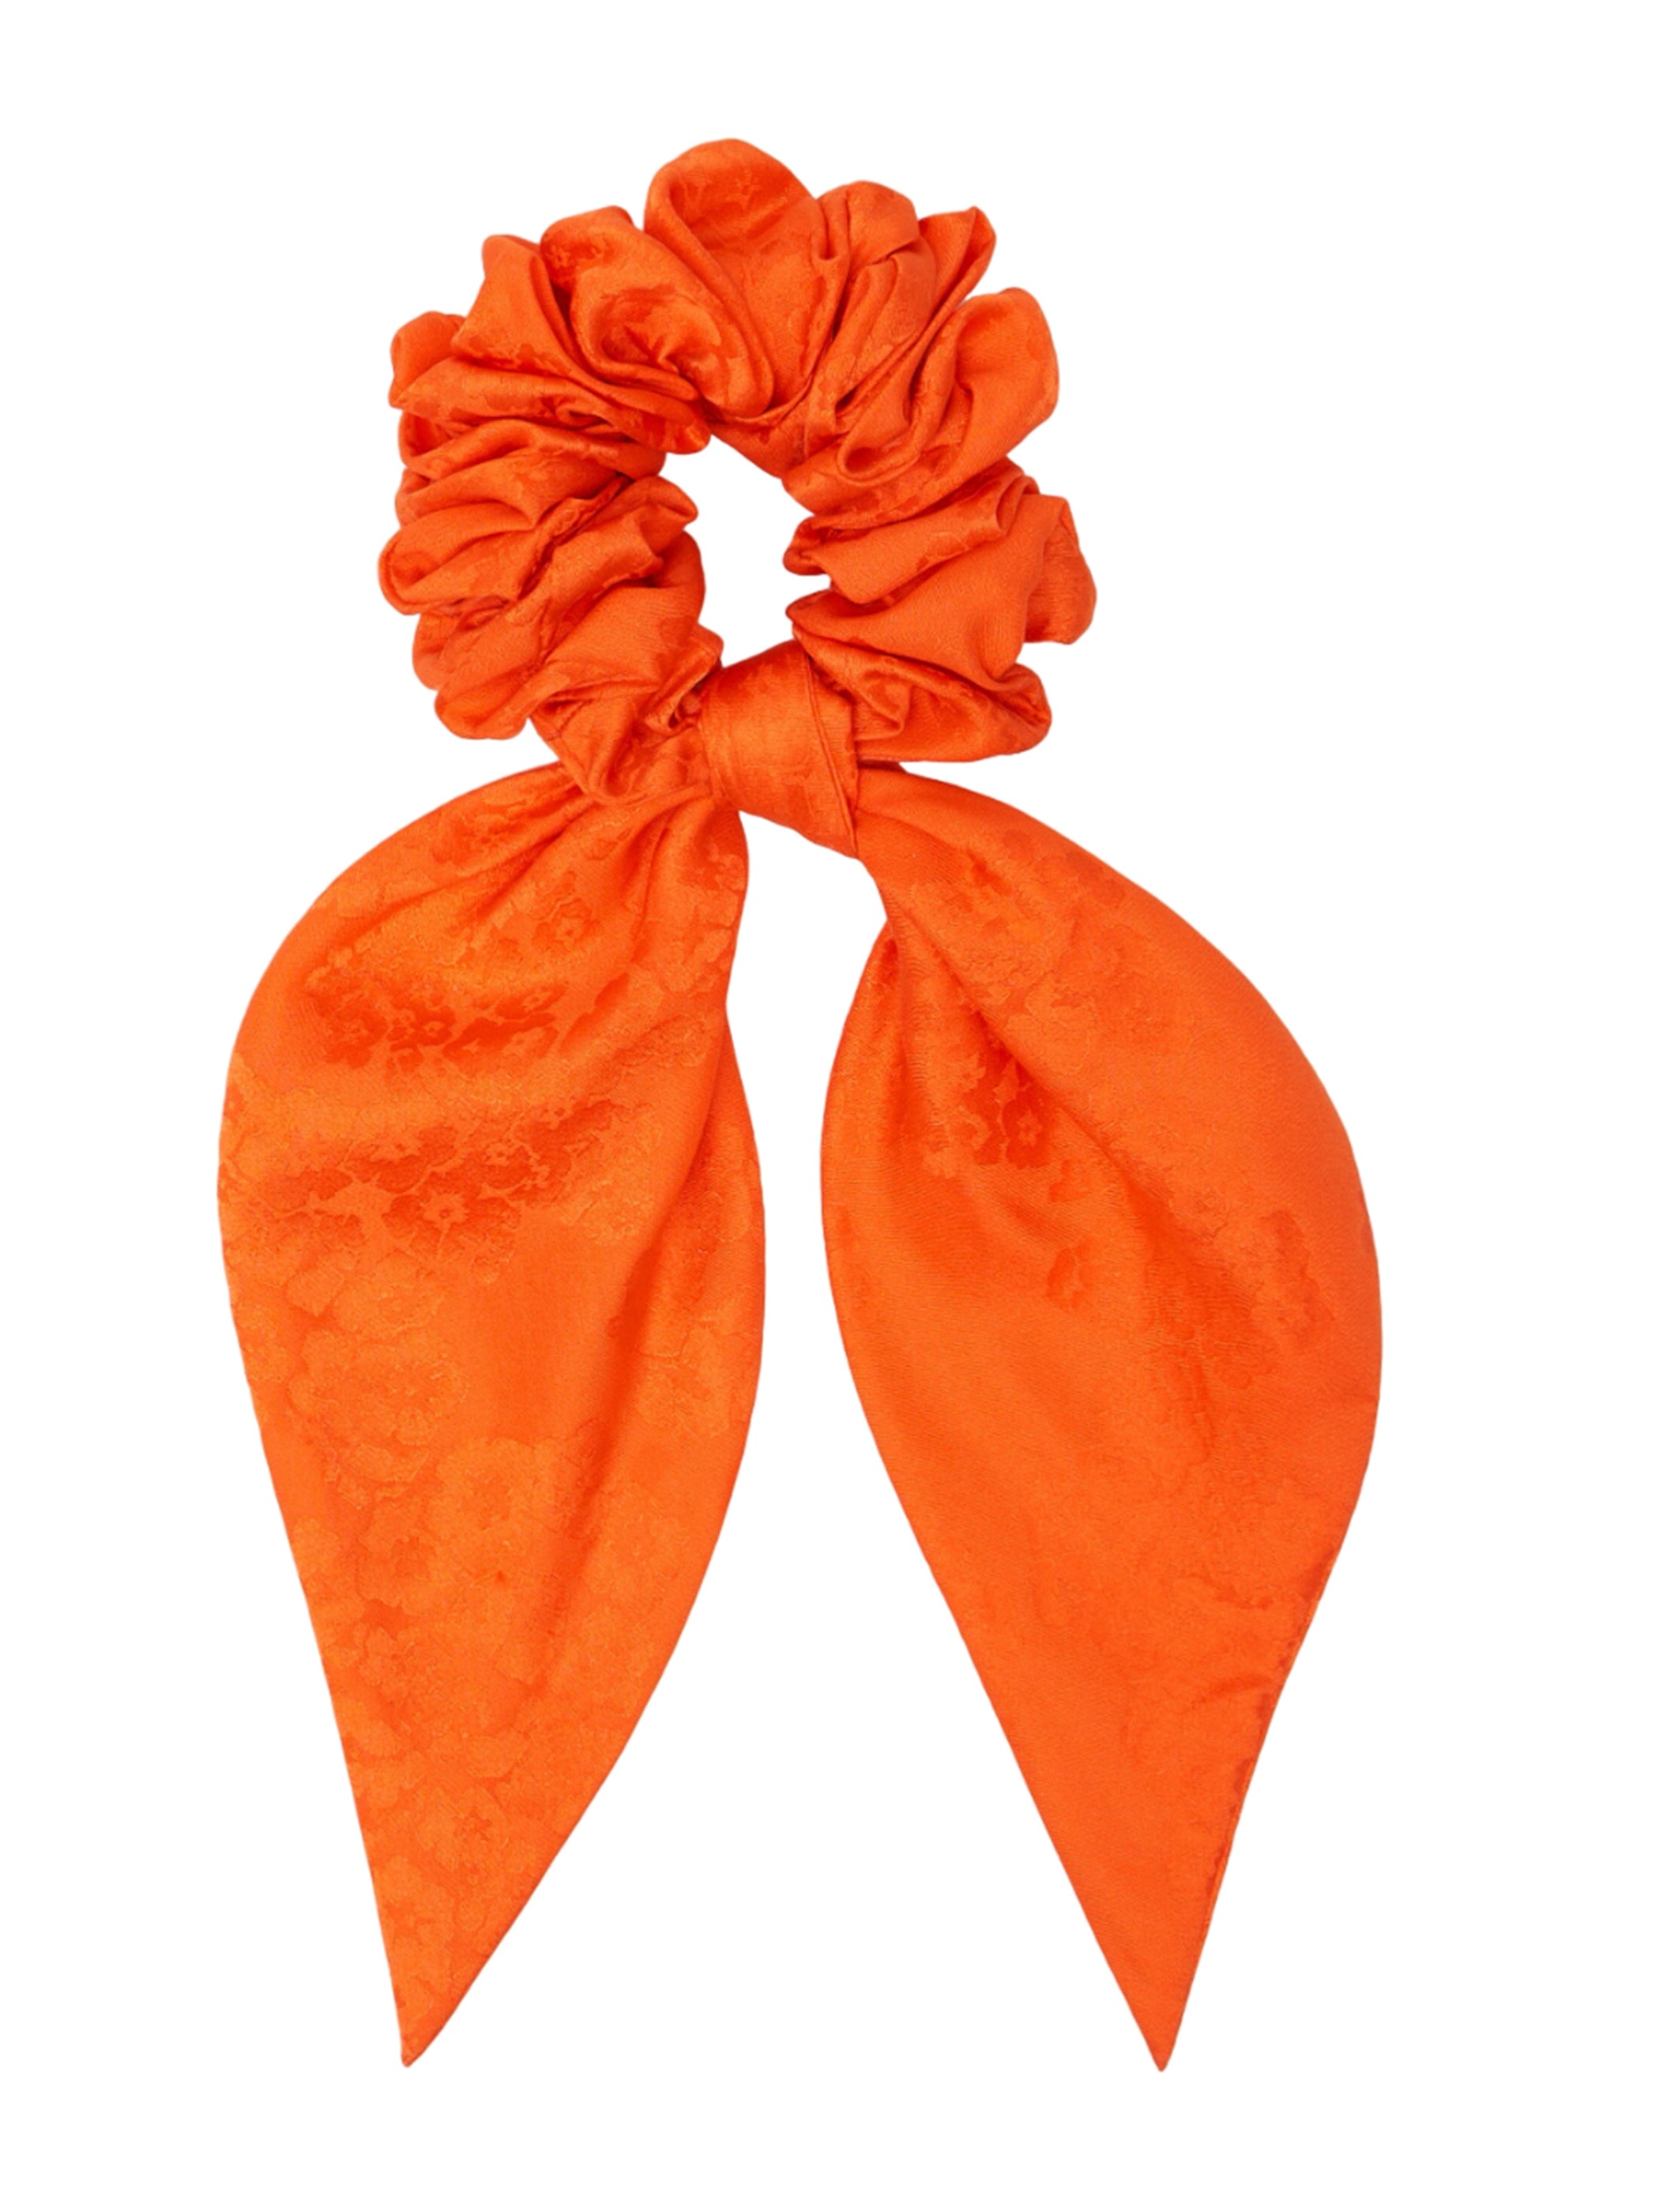 Scarf Scrunchie in Orange